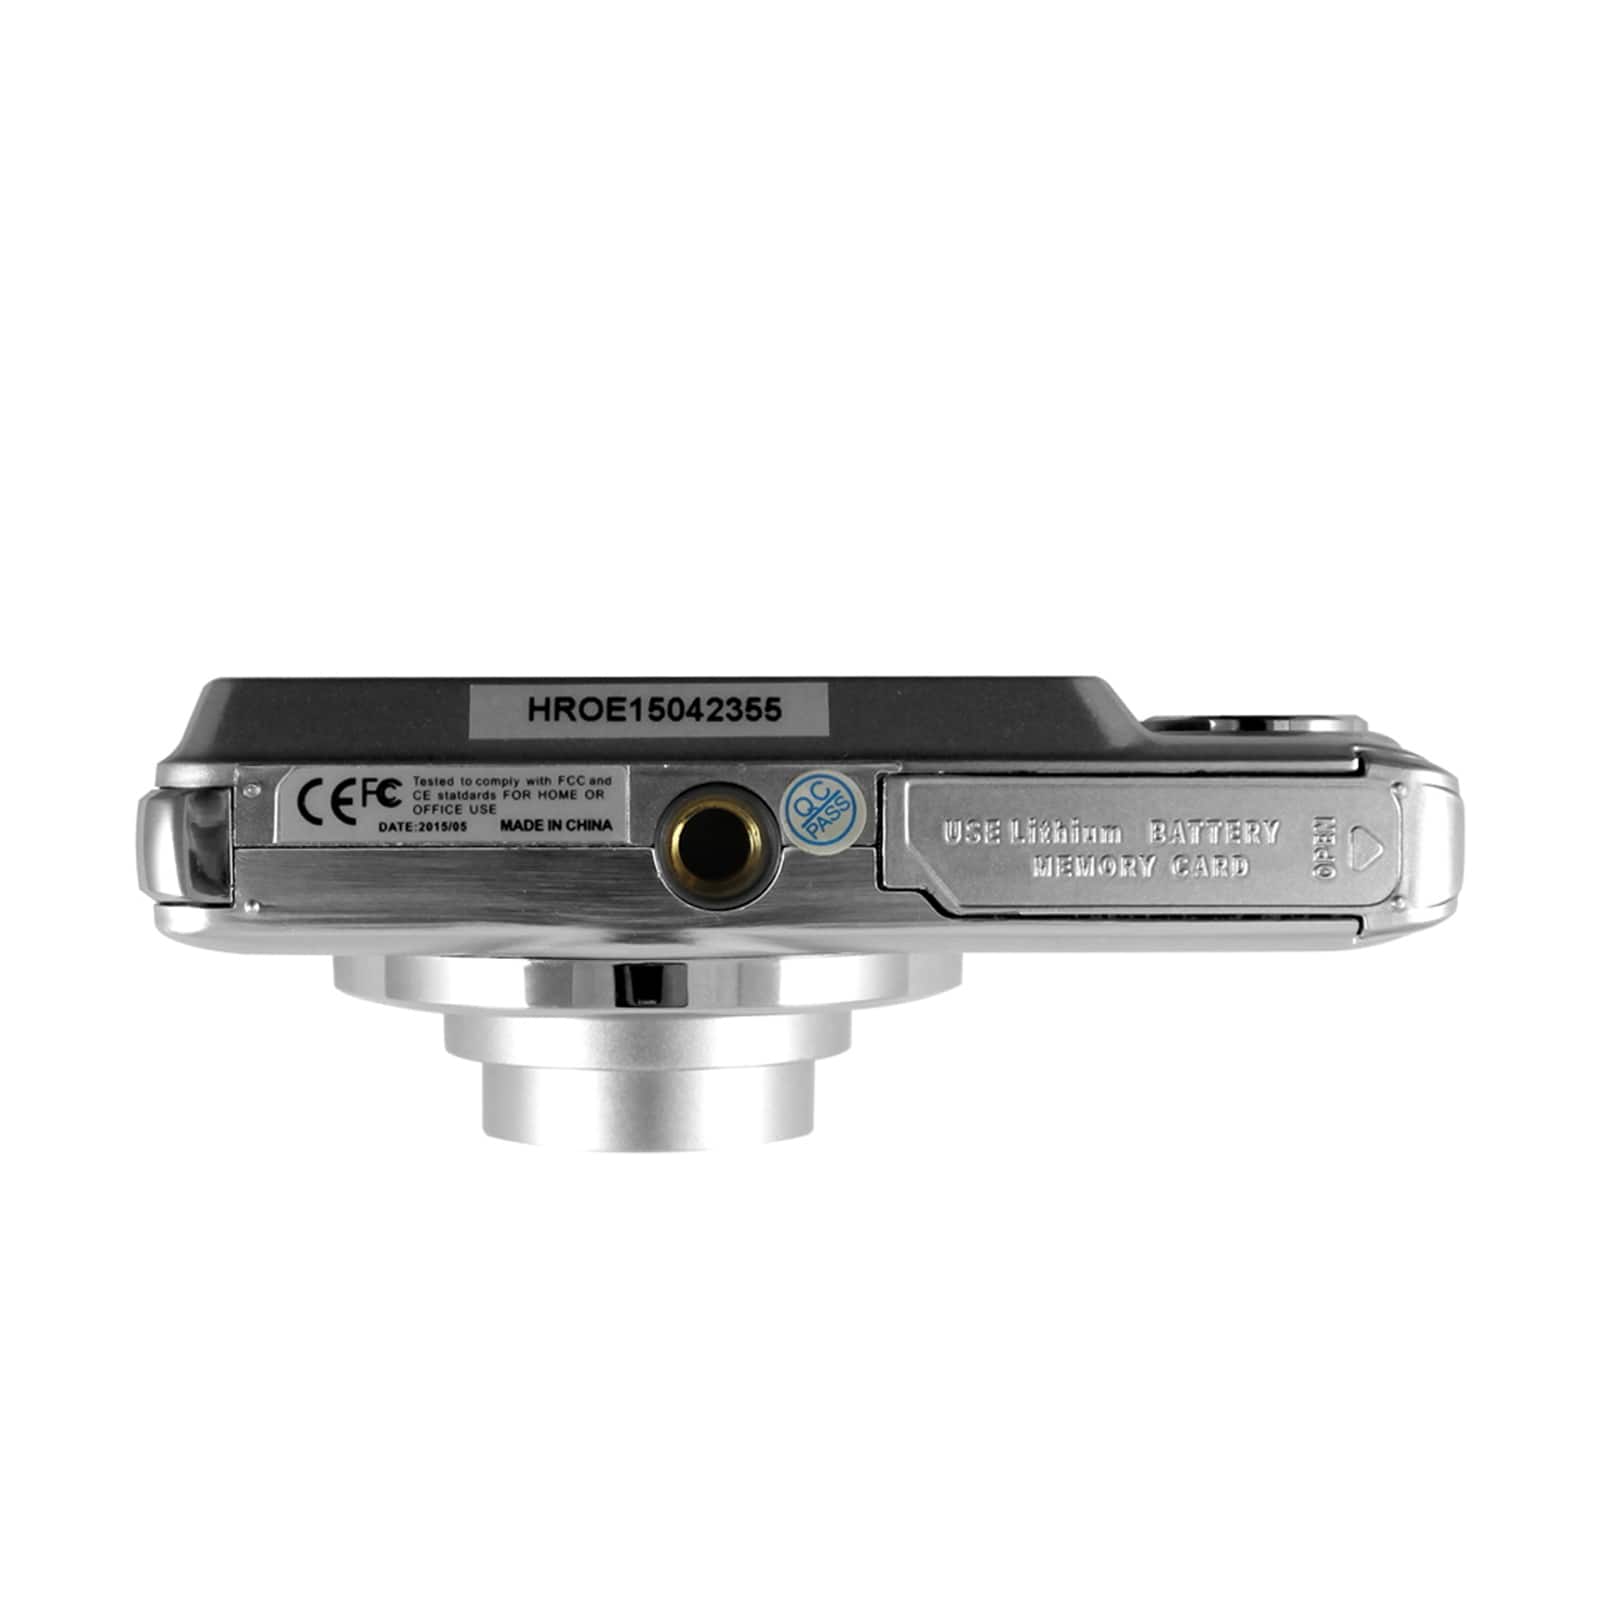 HamiltonBuhl&#xAE; Vivid Pro 18 MP Digital Camera with 8x Optical Zoom Lens